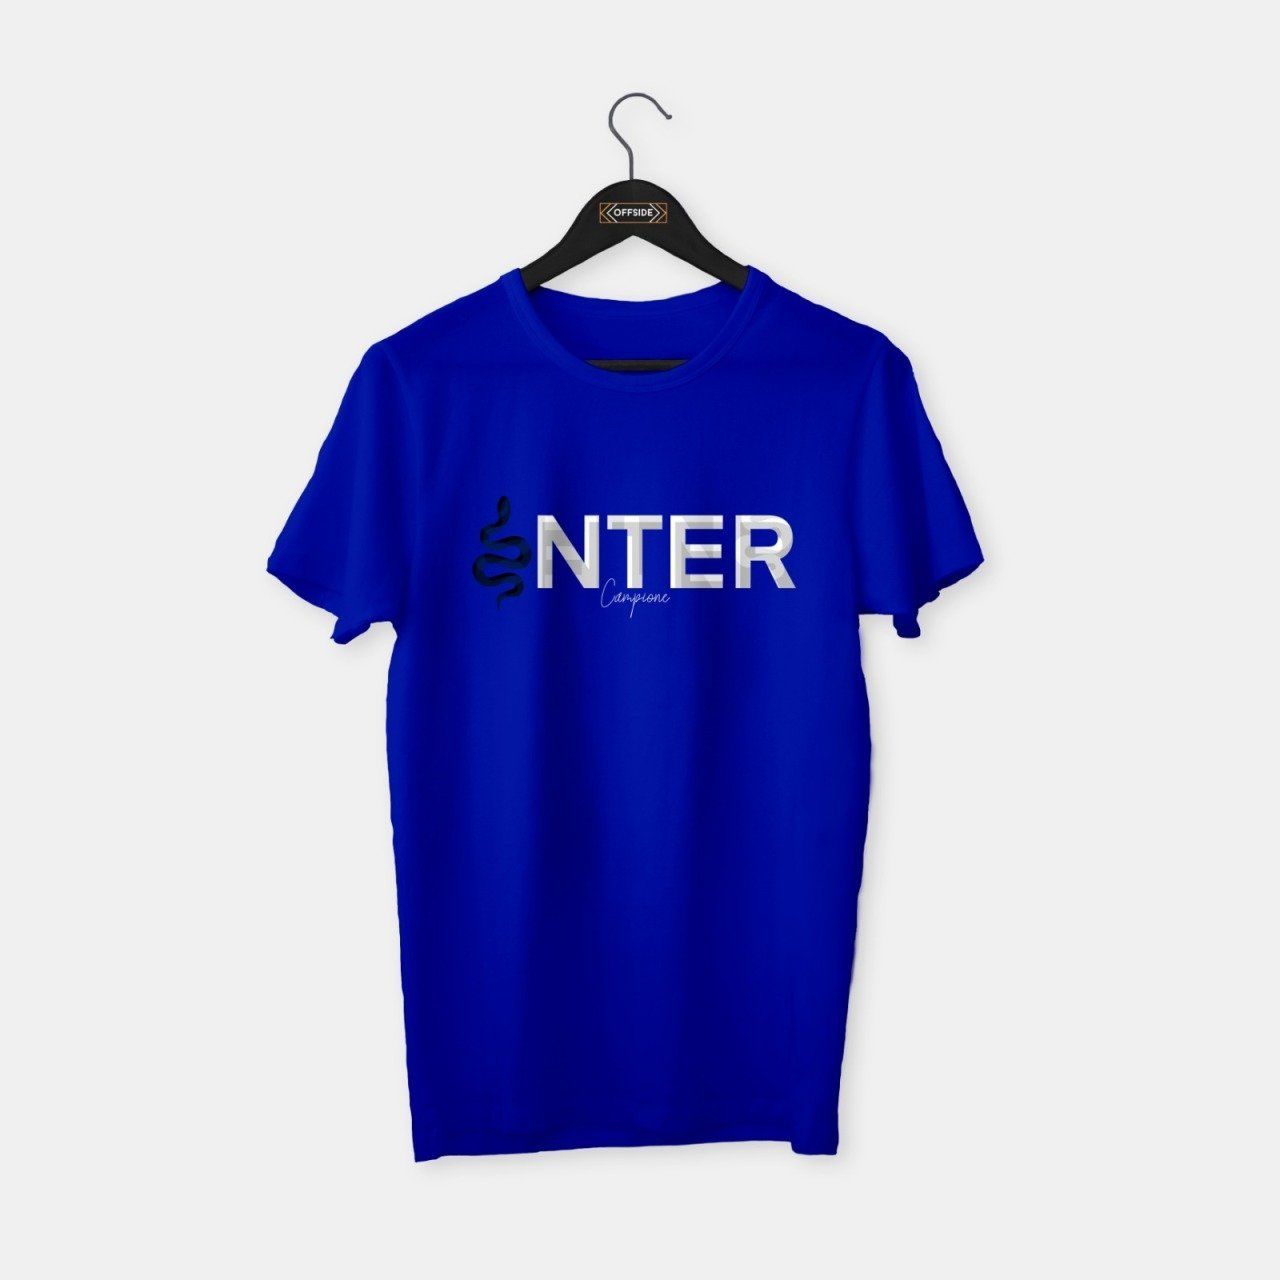 Inter - Champion T-shirt